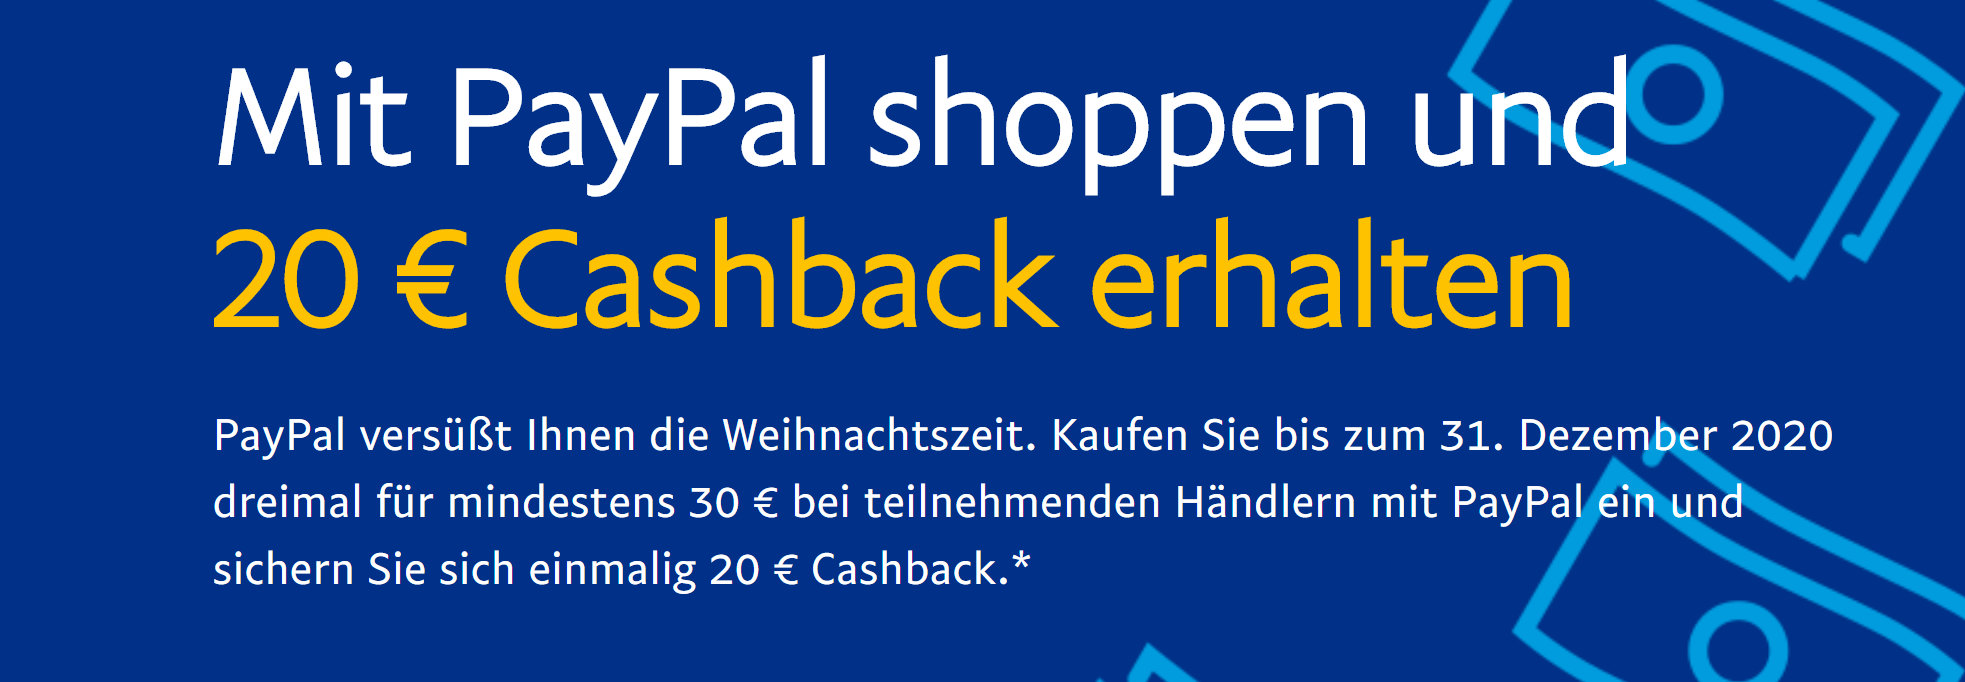 PayPal-Cashback.jpg